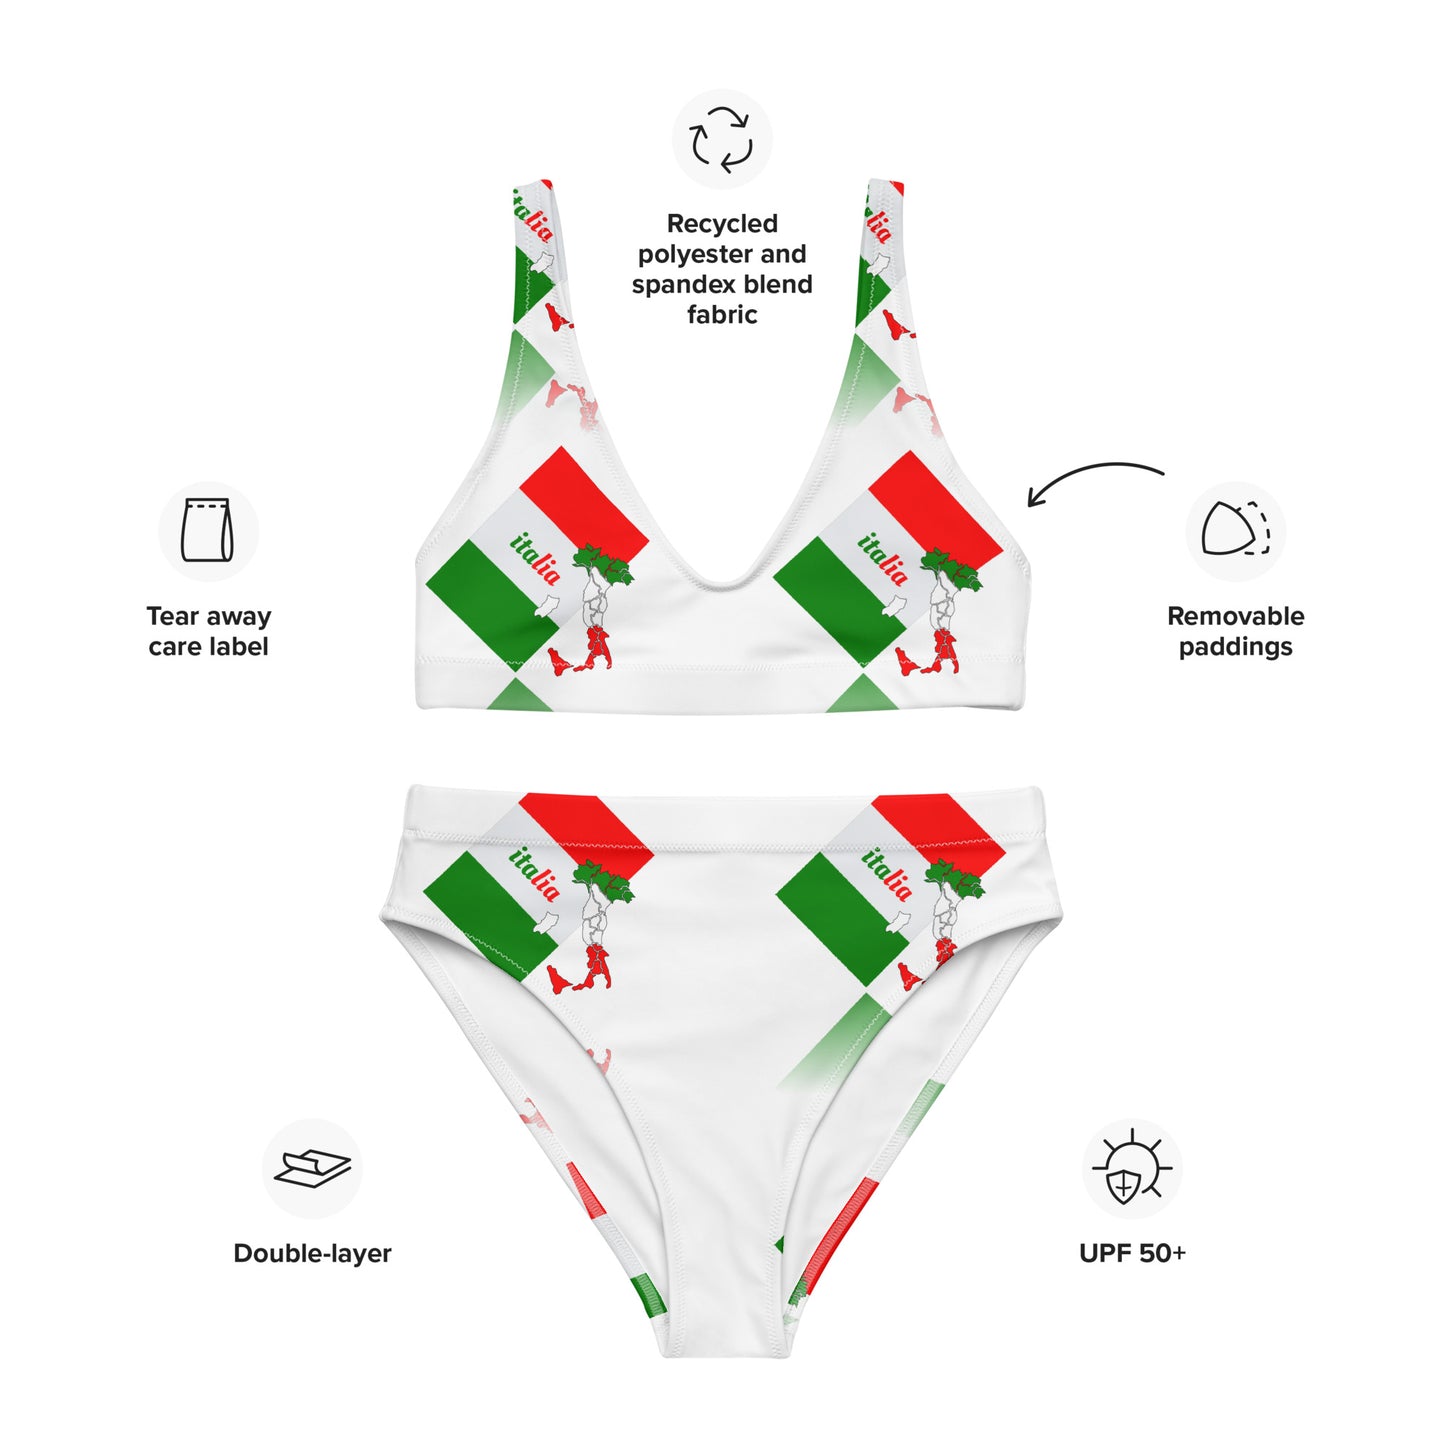 Elegante bikini de talle alto reciclado con mapa y bandera de Italia-Italia